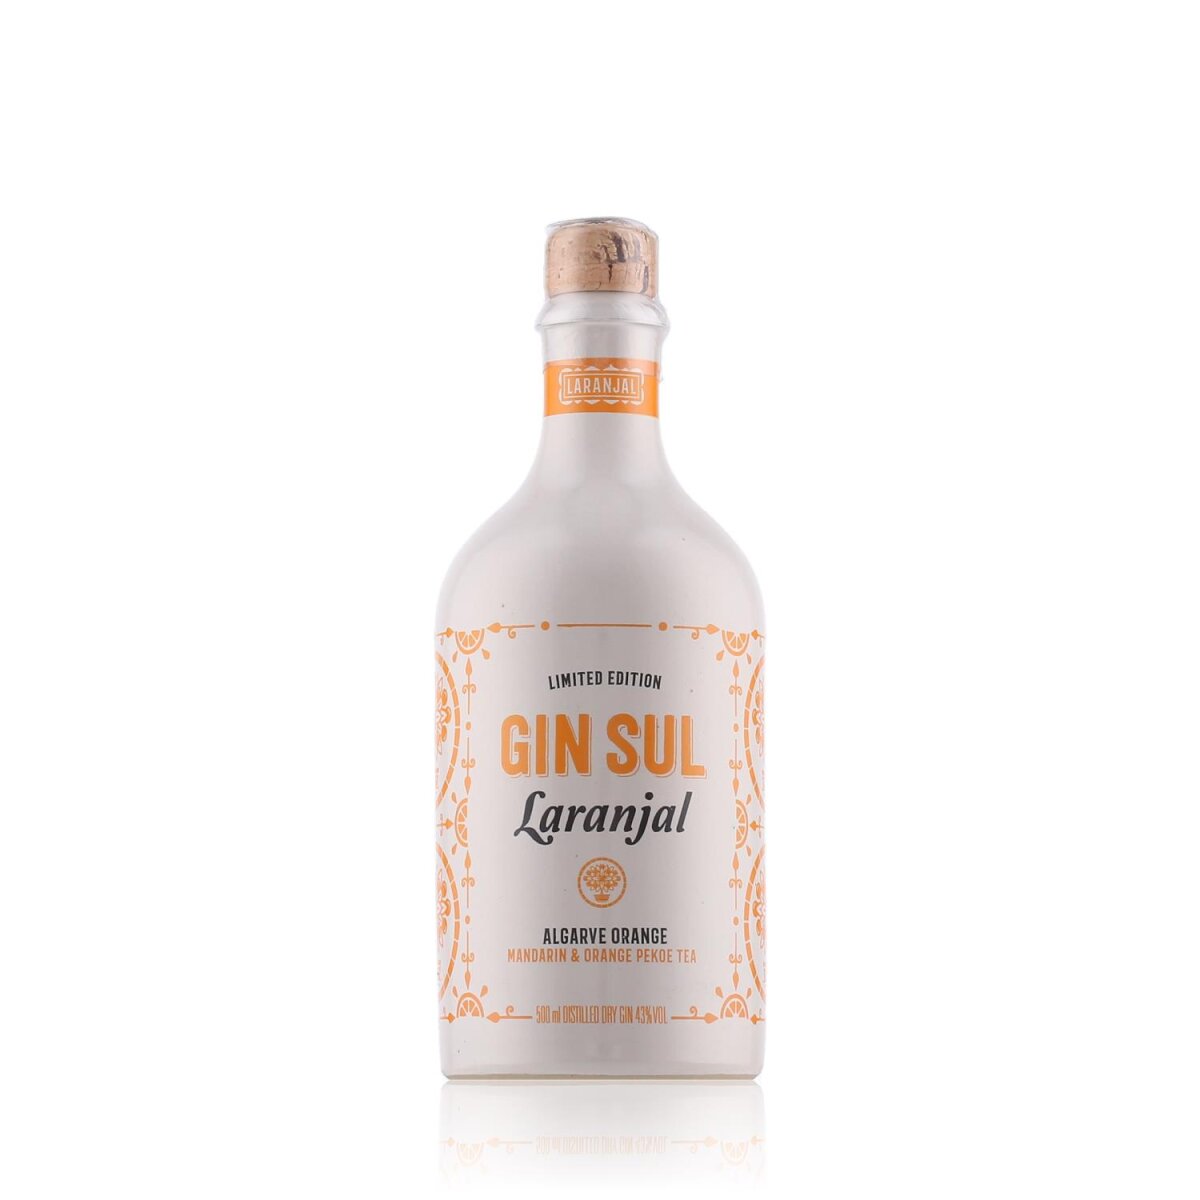 Gin Sul Laranjal Limited Edition Vol. 43% € 27,49 0,5l